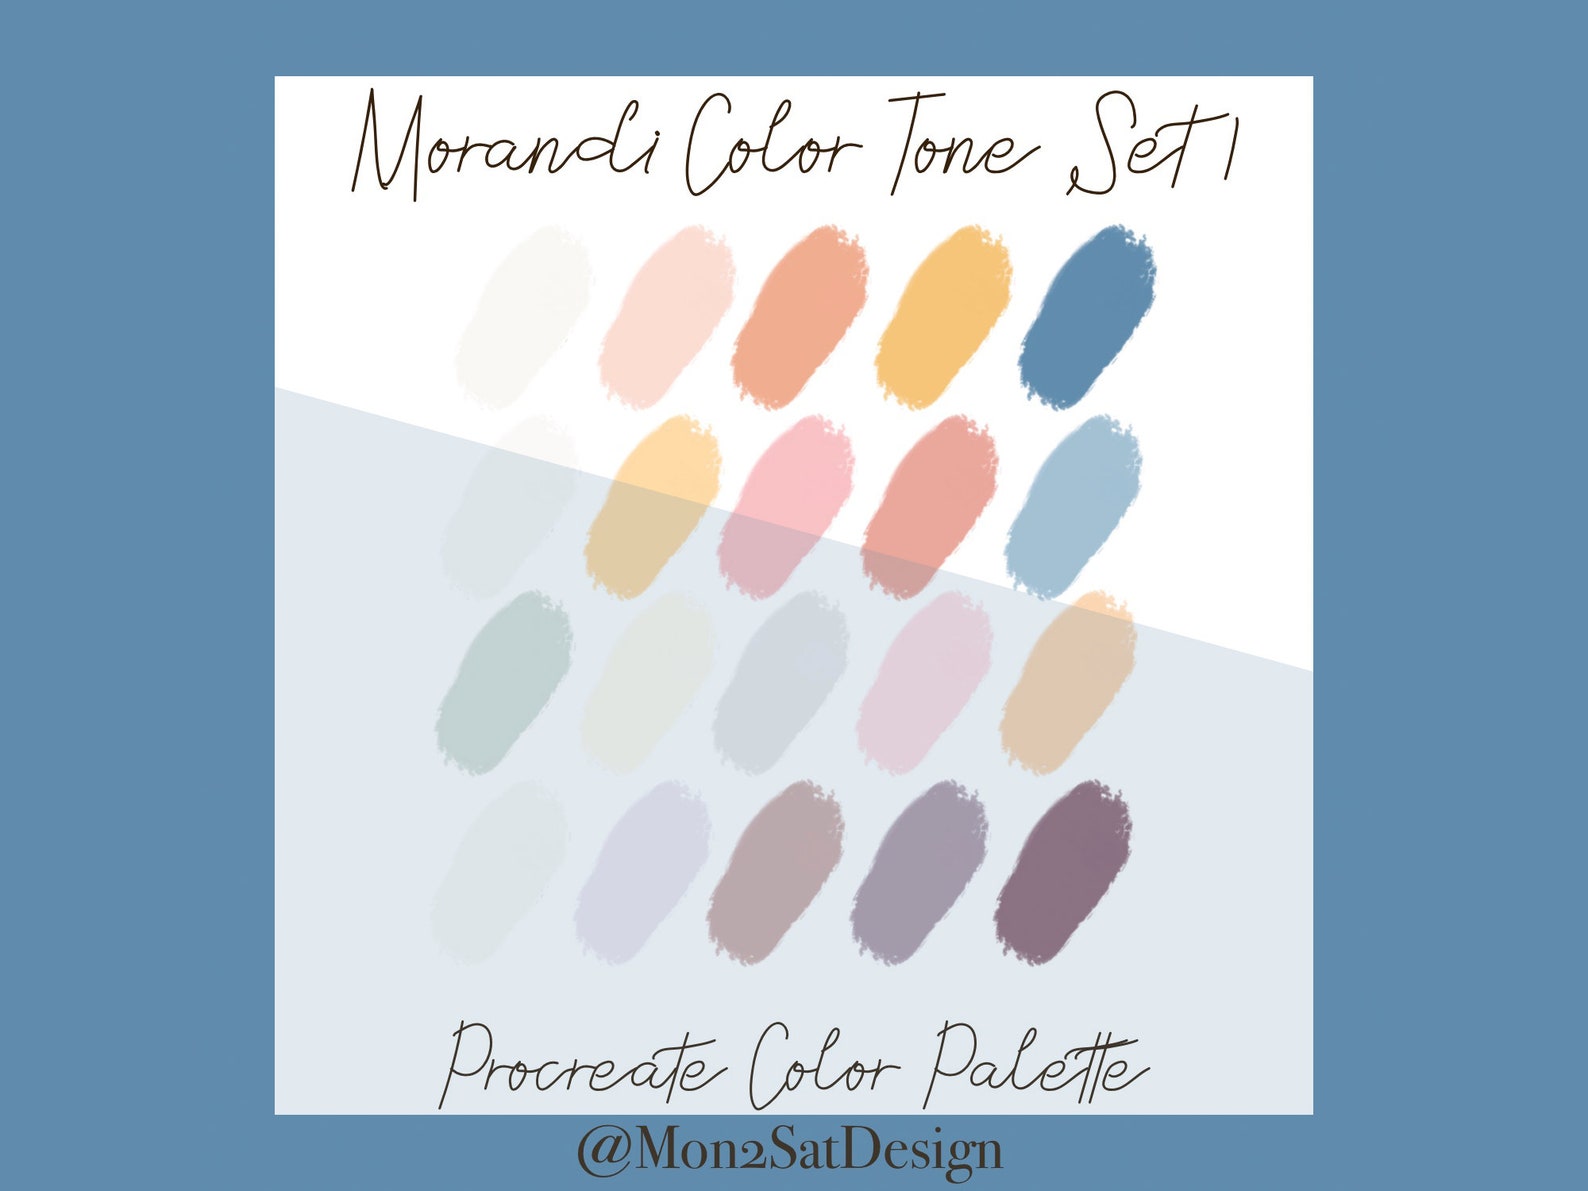 Morandi Color Nail Polish Gift Set - wide 5